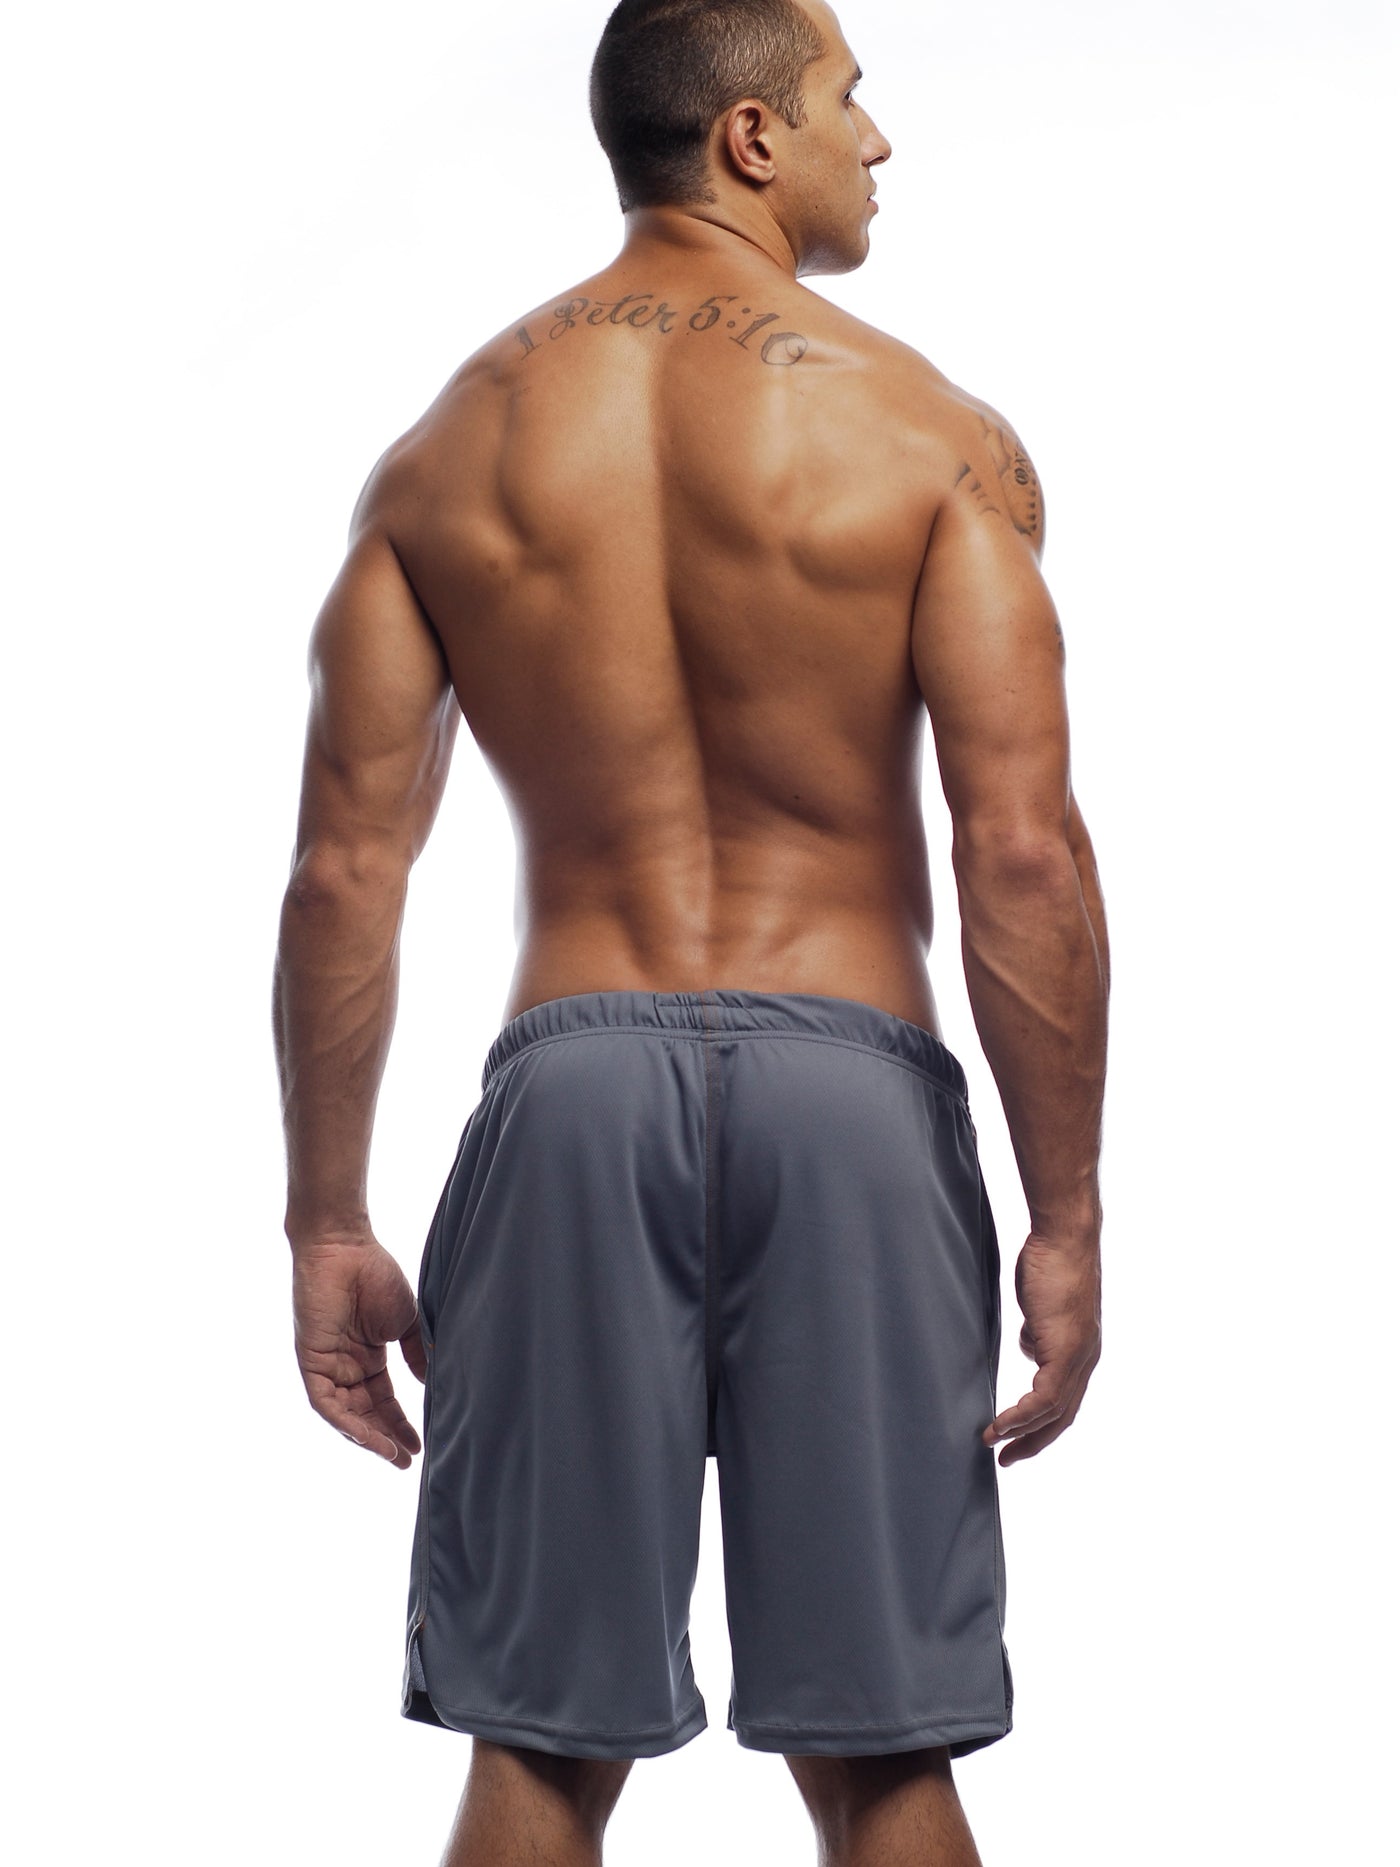 AMERICAN JOCK Gym Shorts with Built-In Jockstrap Grey - Activemen Clothing